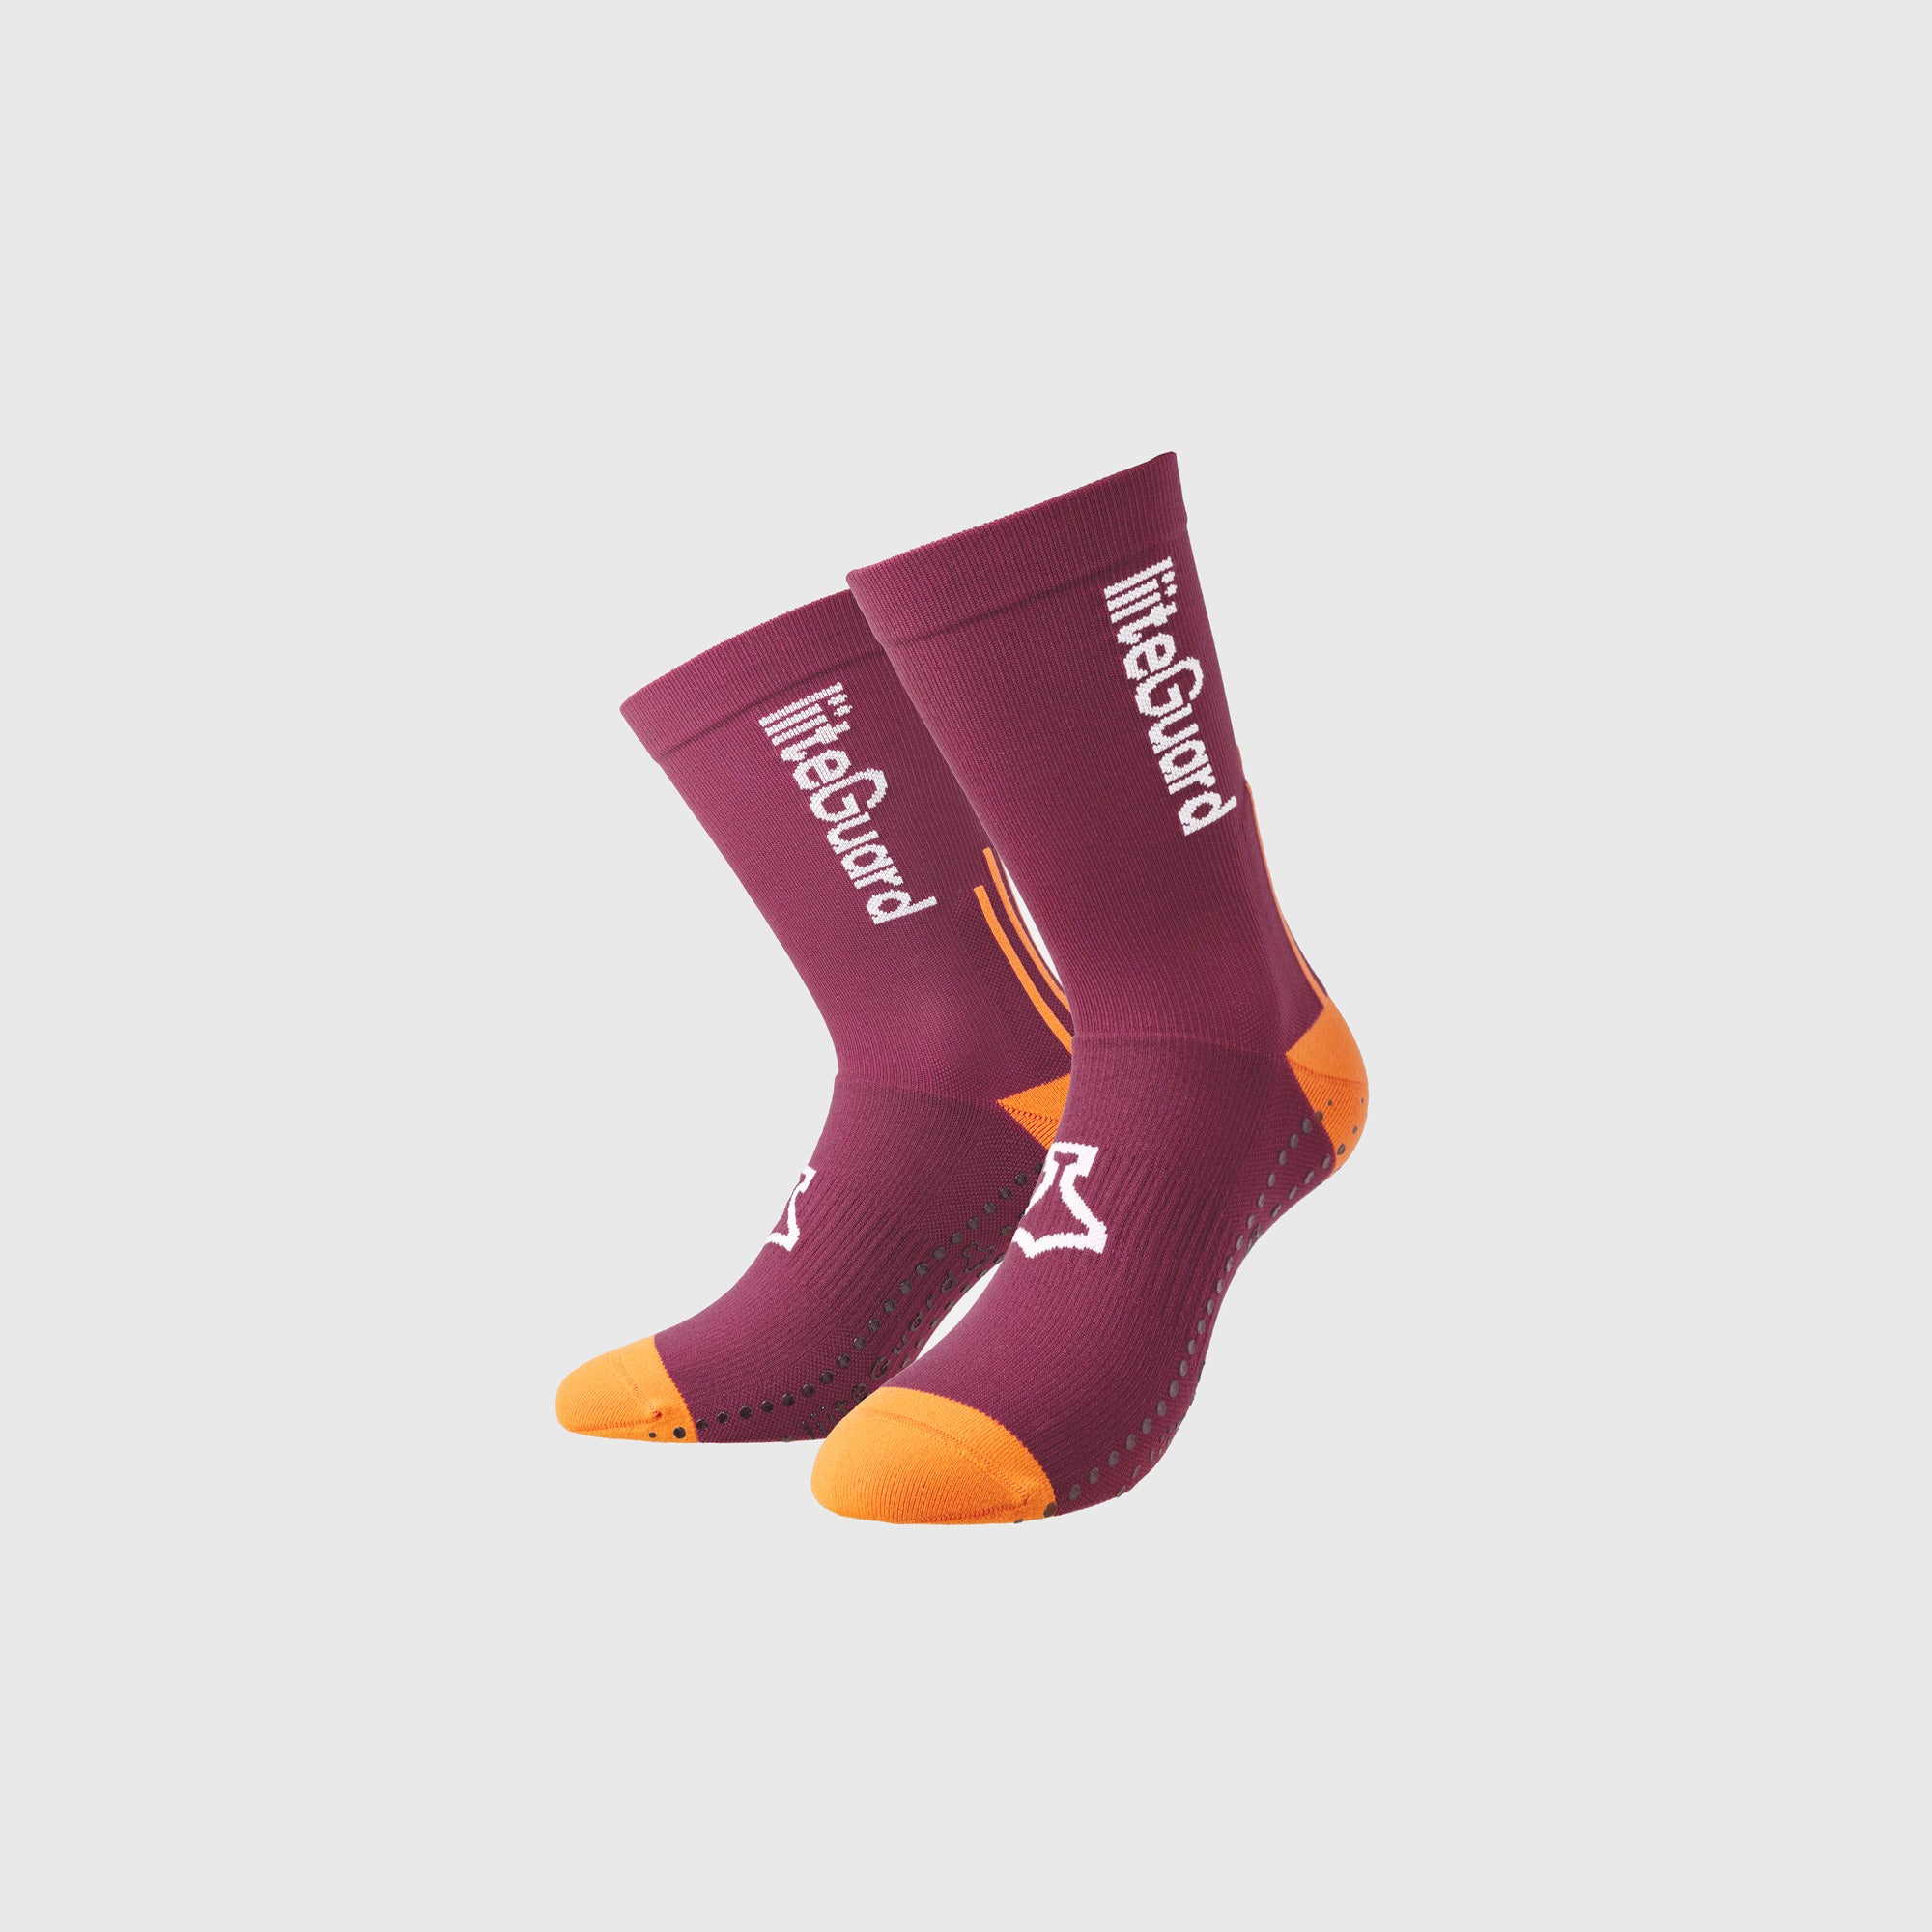 Liiteguard PRO-TECH LG Medium socks Bordeaux